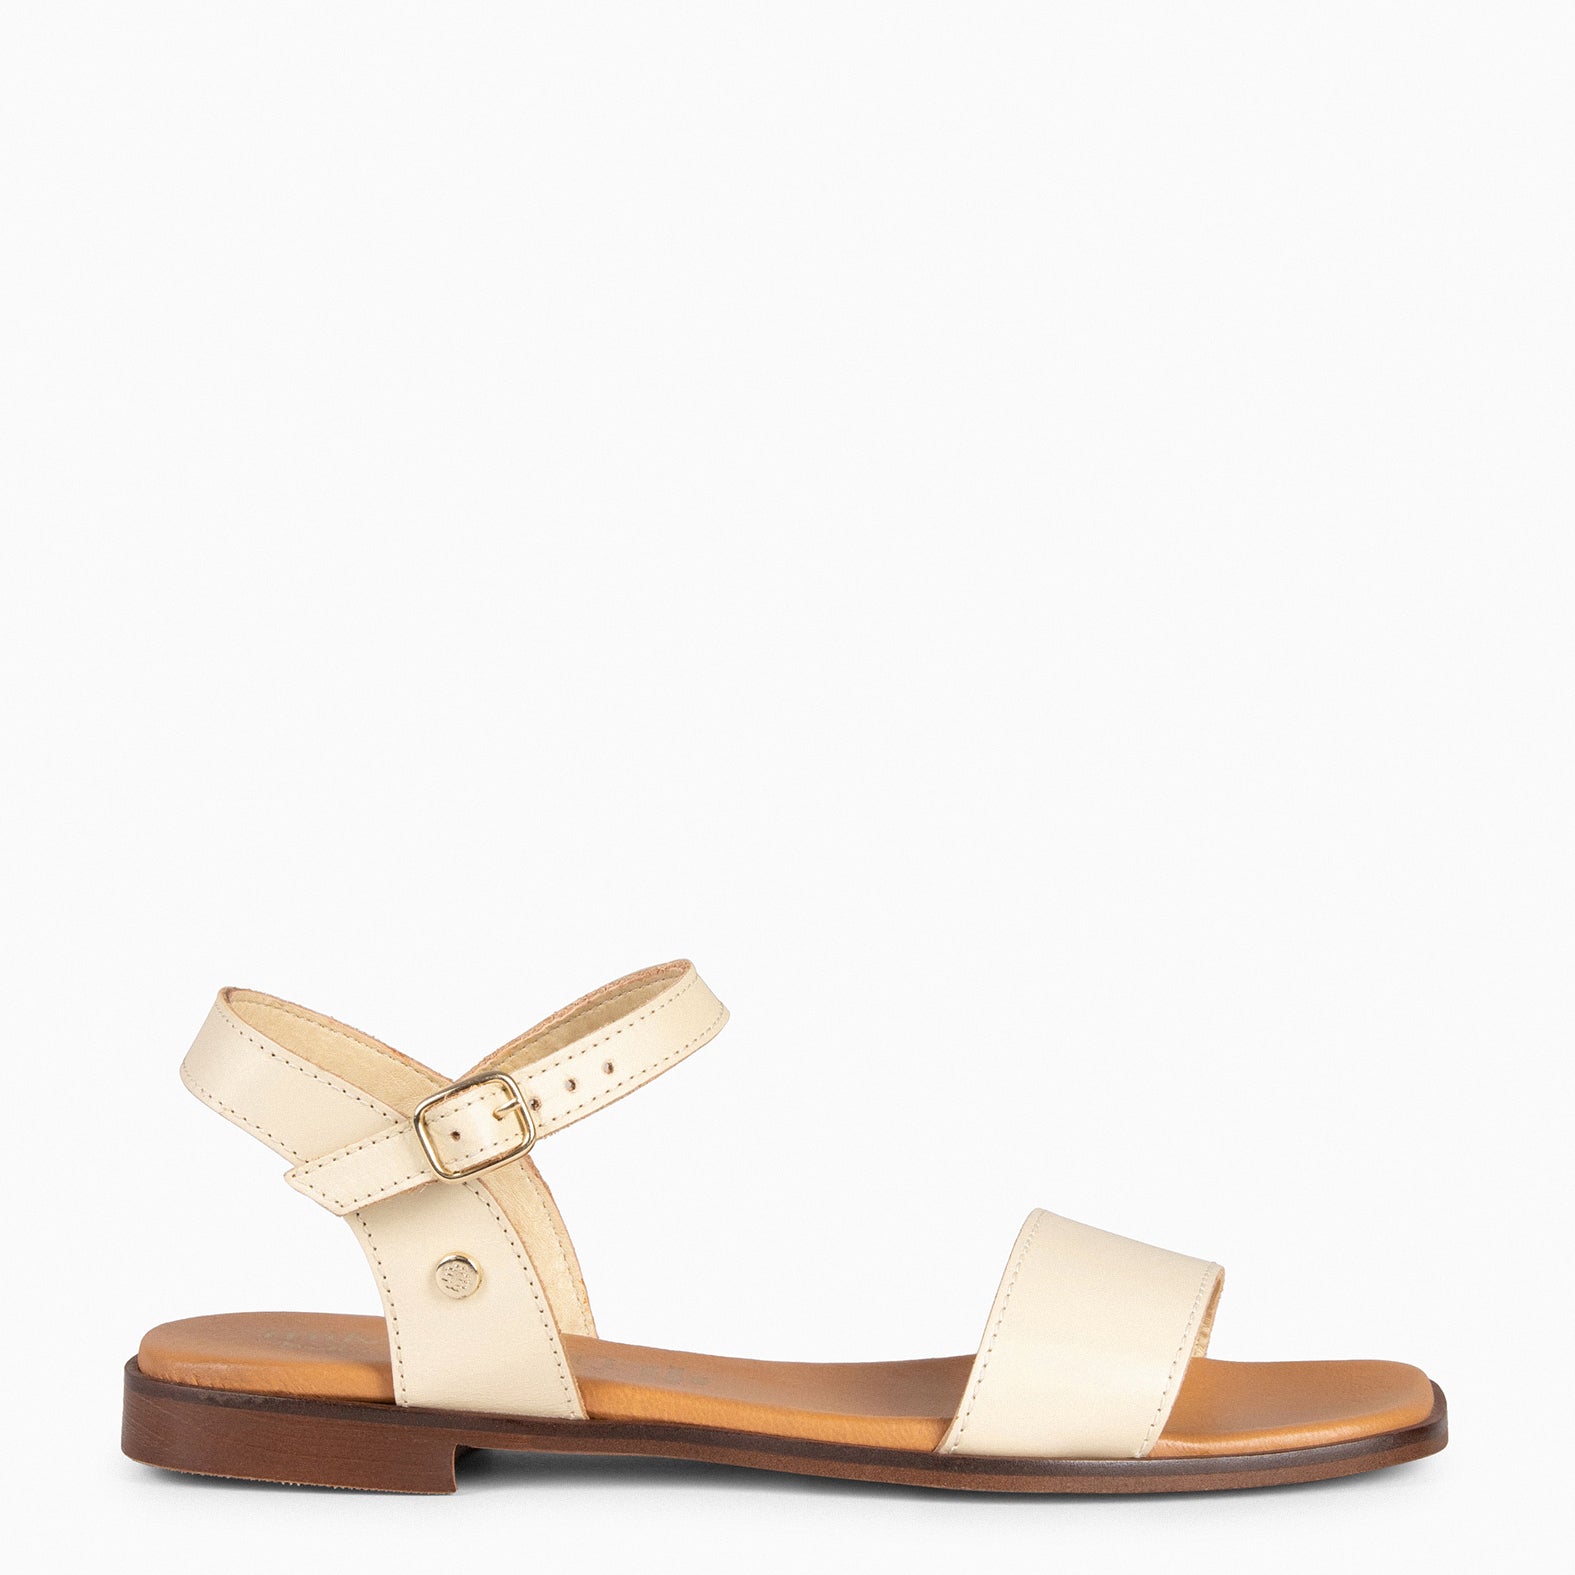 SANTORINI - BEIGE Flat Sandals